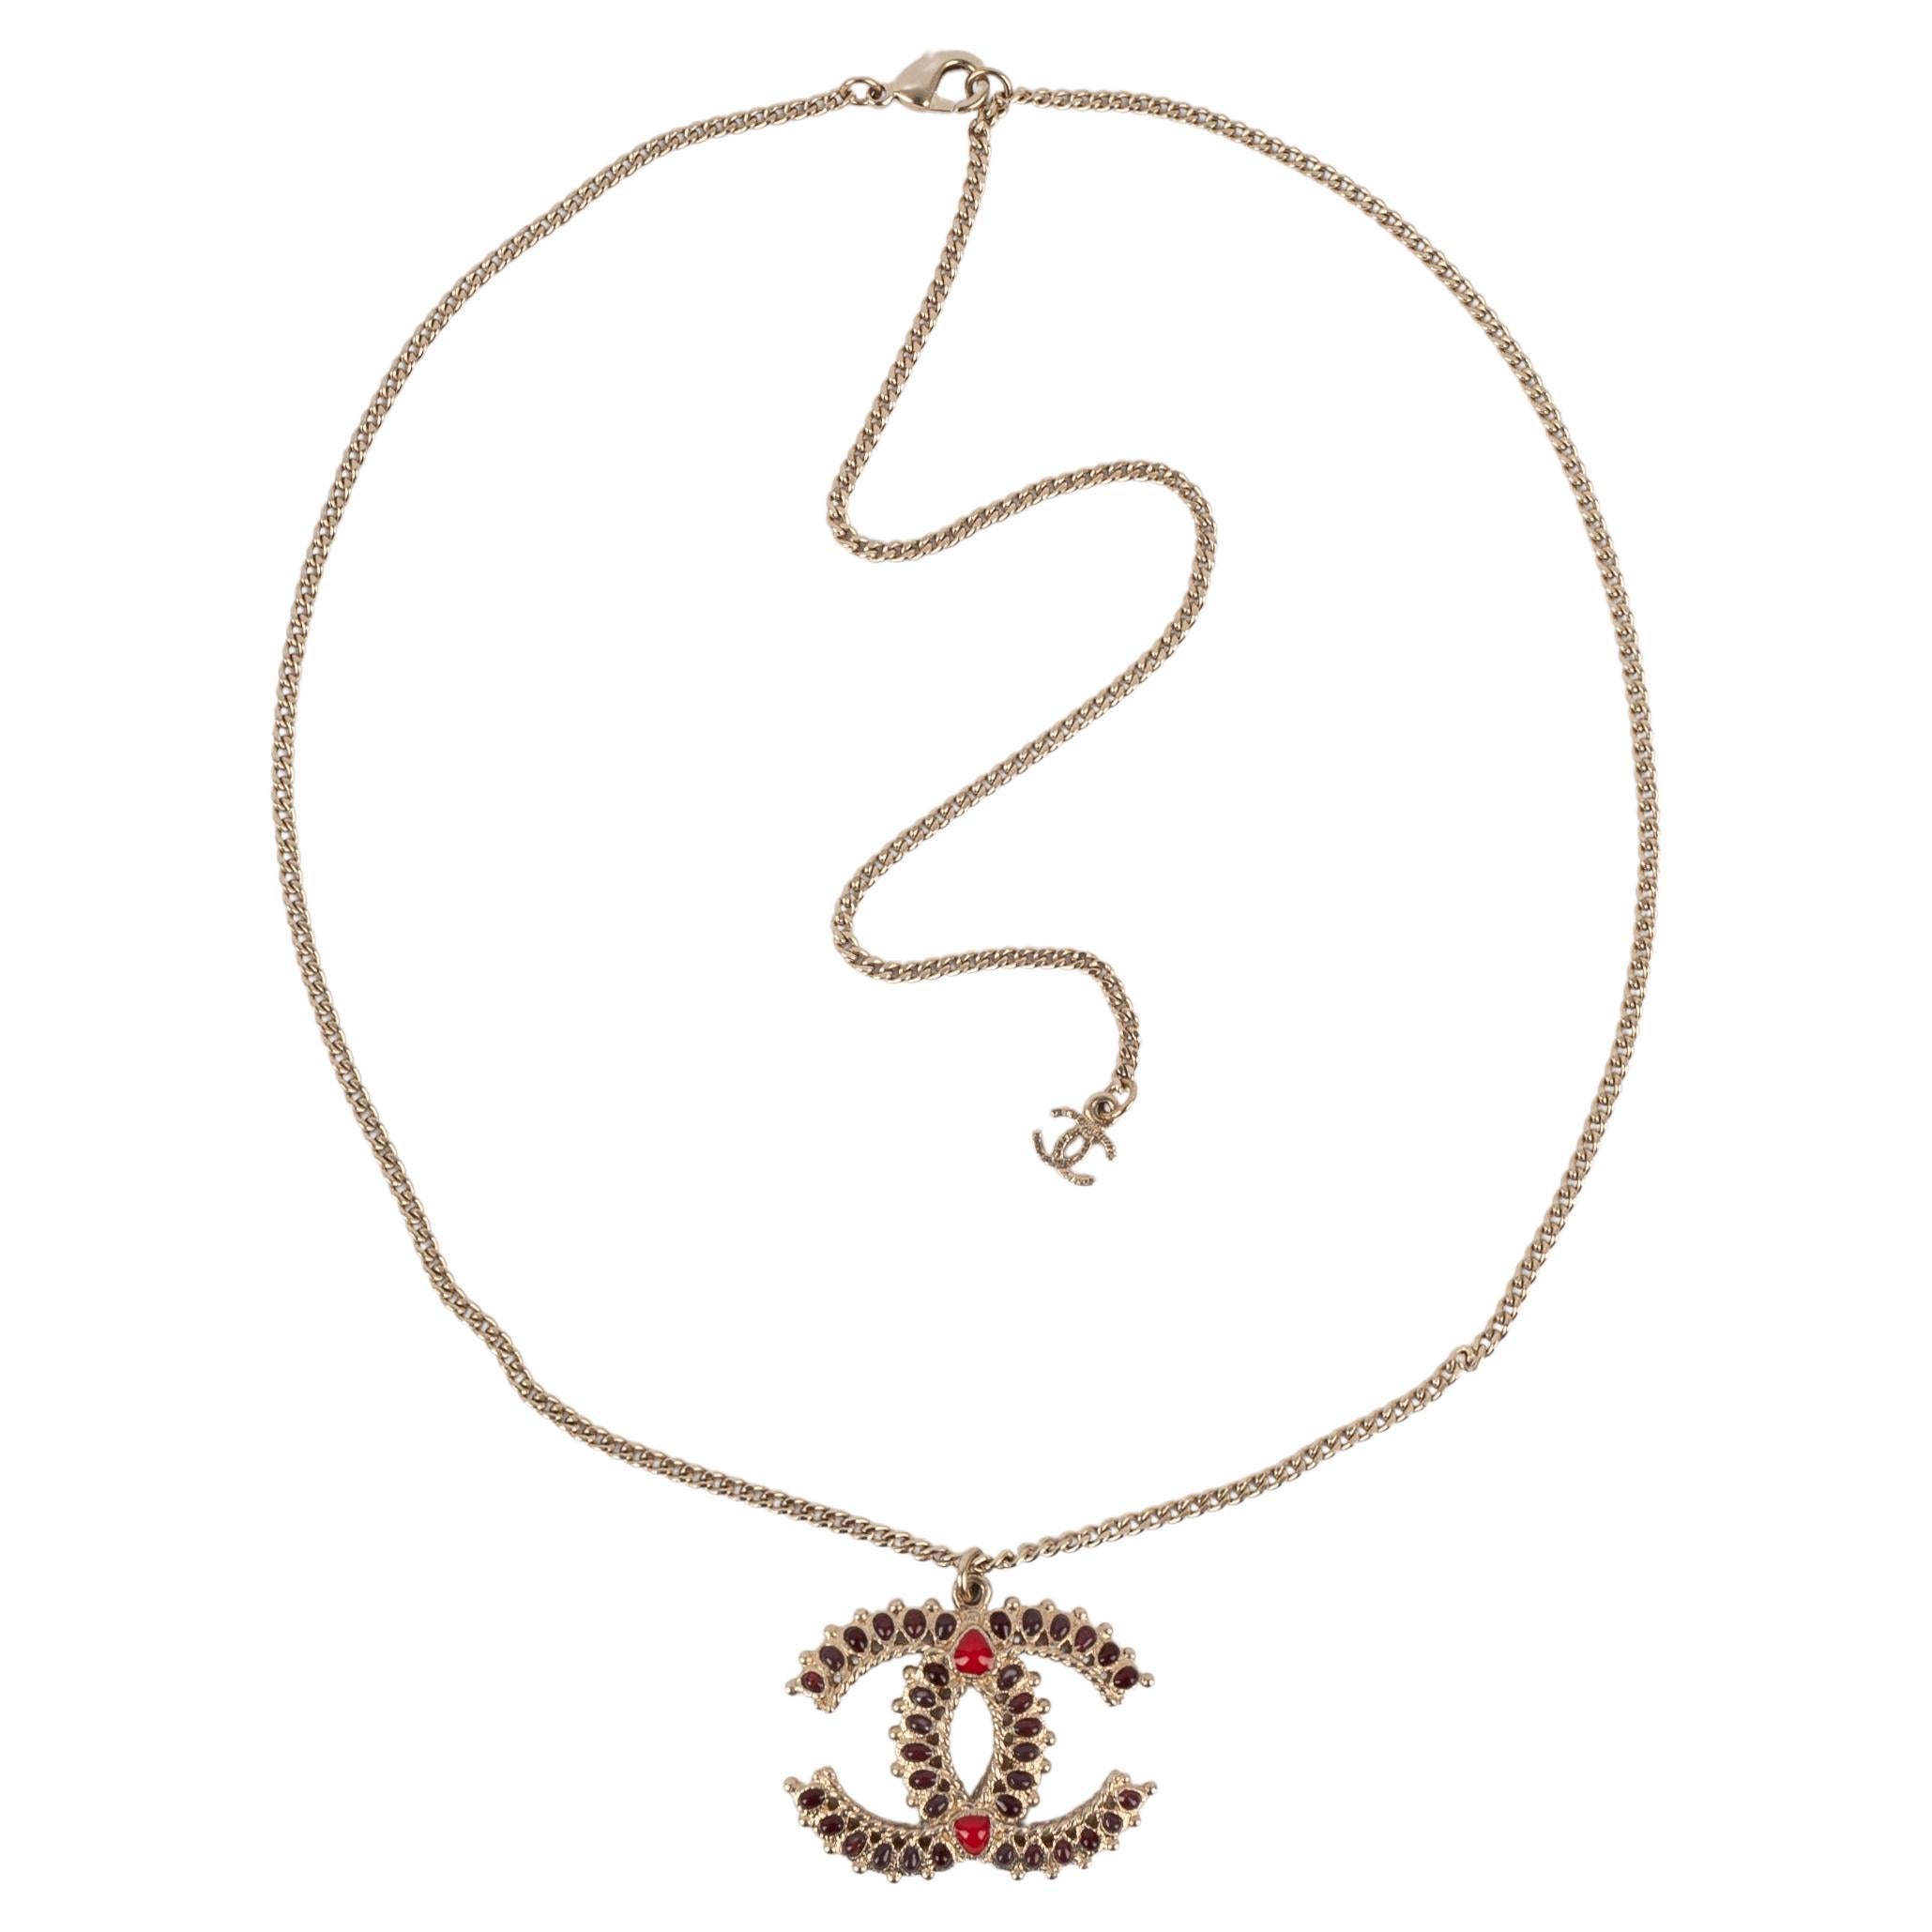 Chanel cc necklace 2014